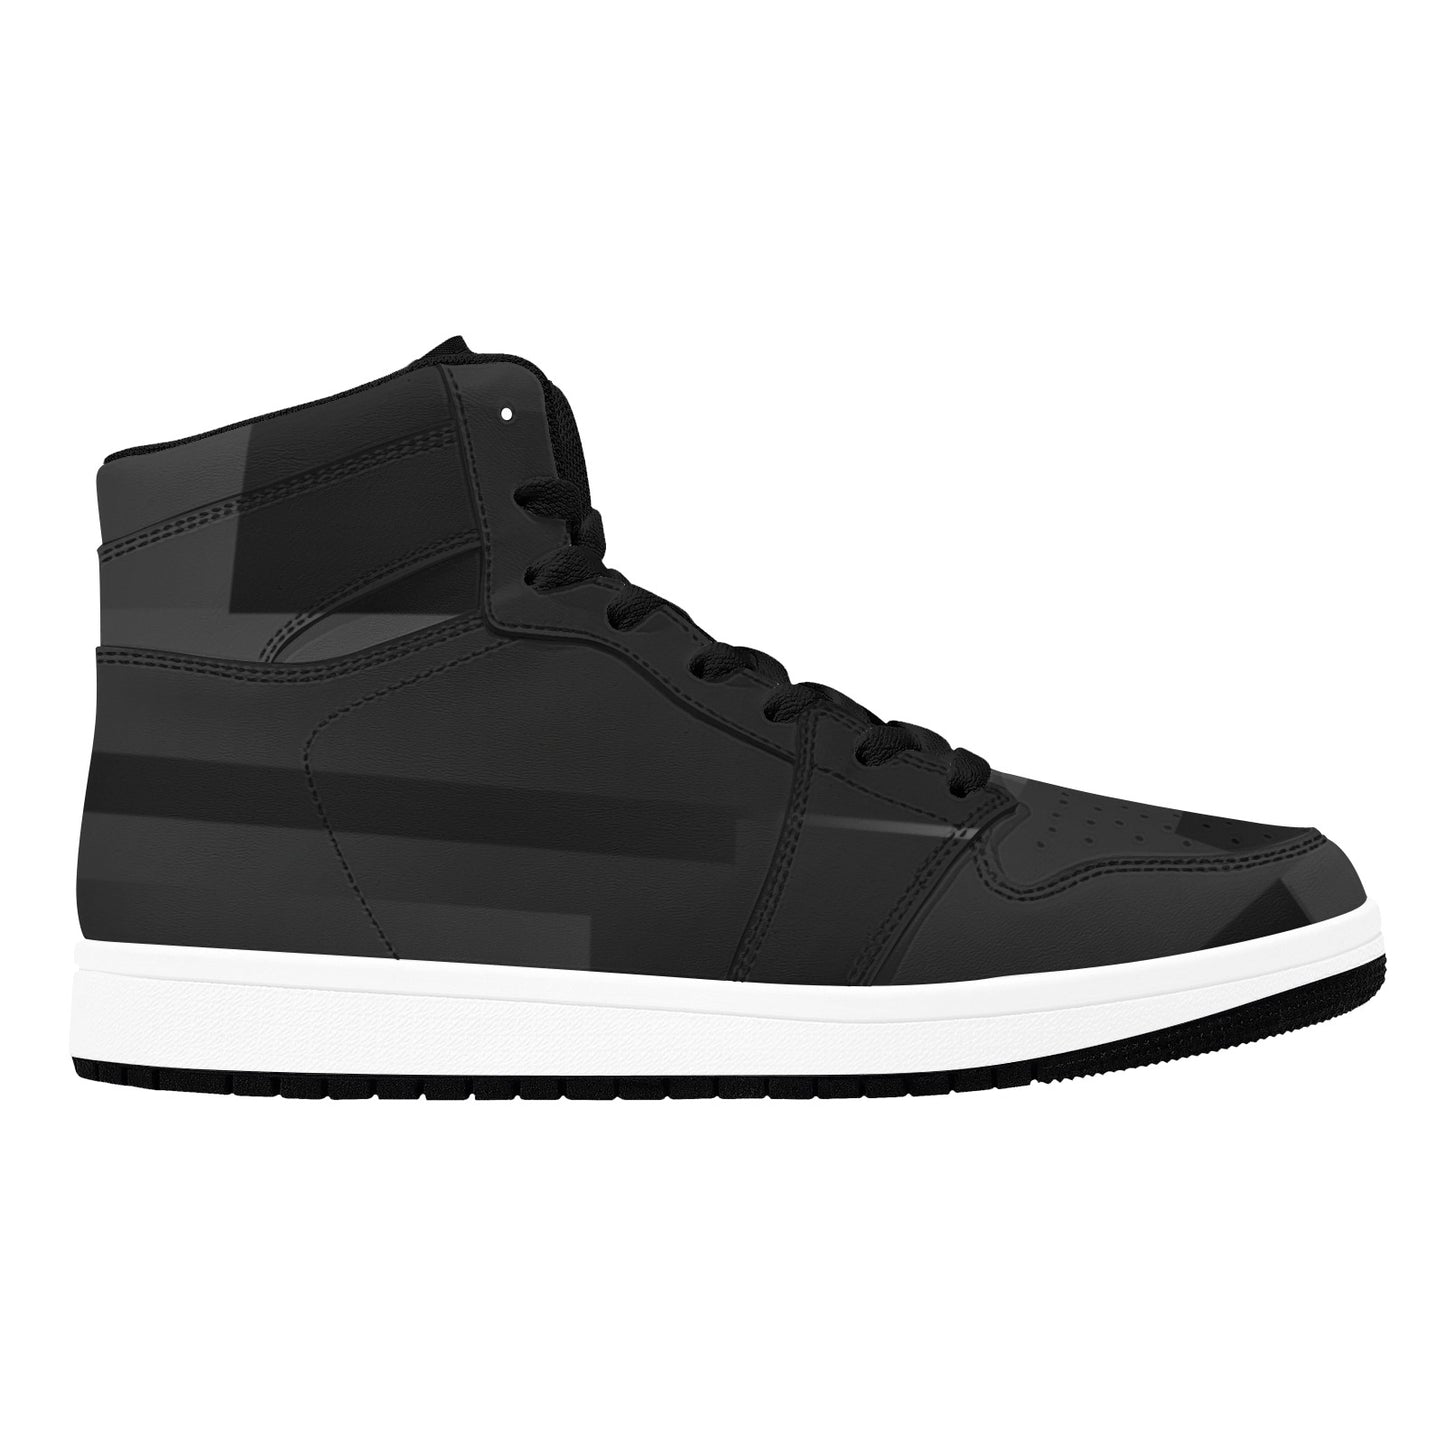 Black High Top Sneakers Modern Black HIgh Top Sneakers Design Men's High Top Sneakers